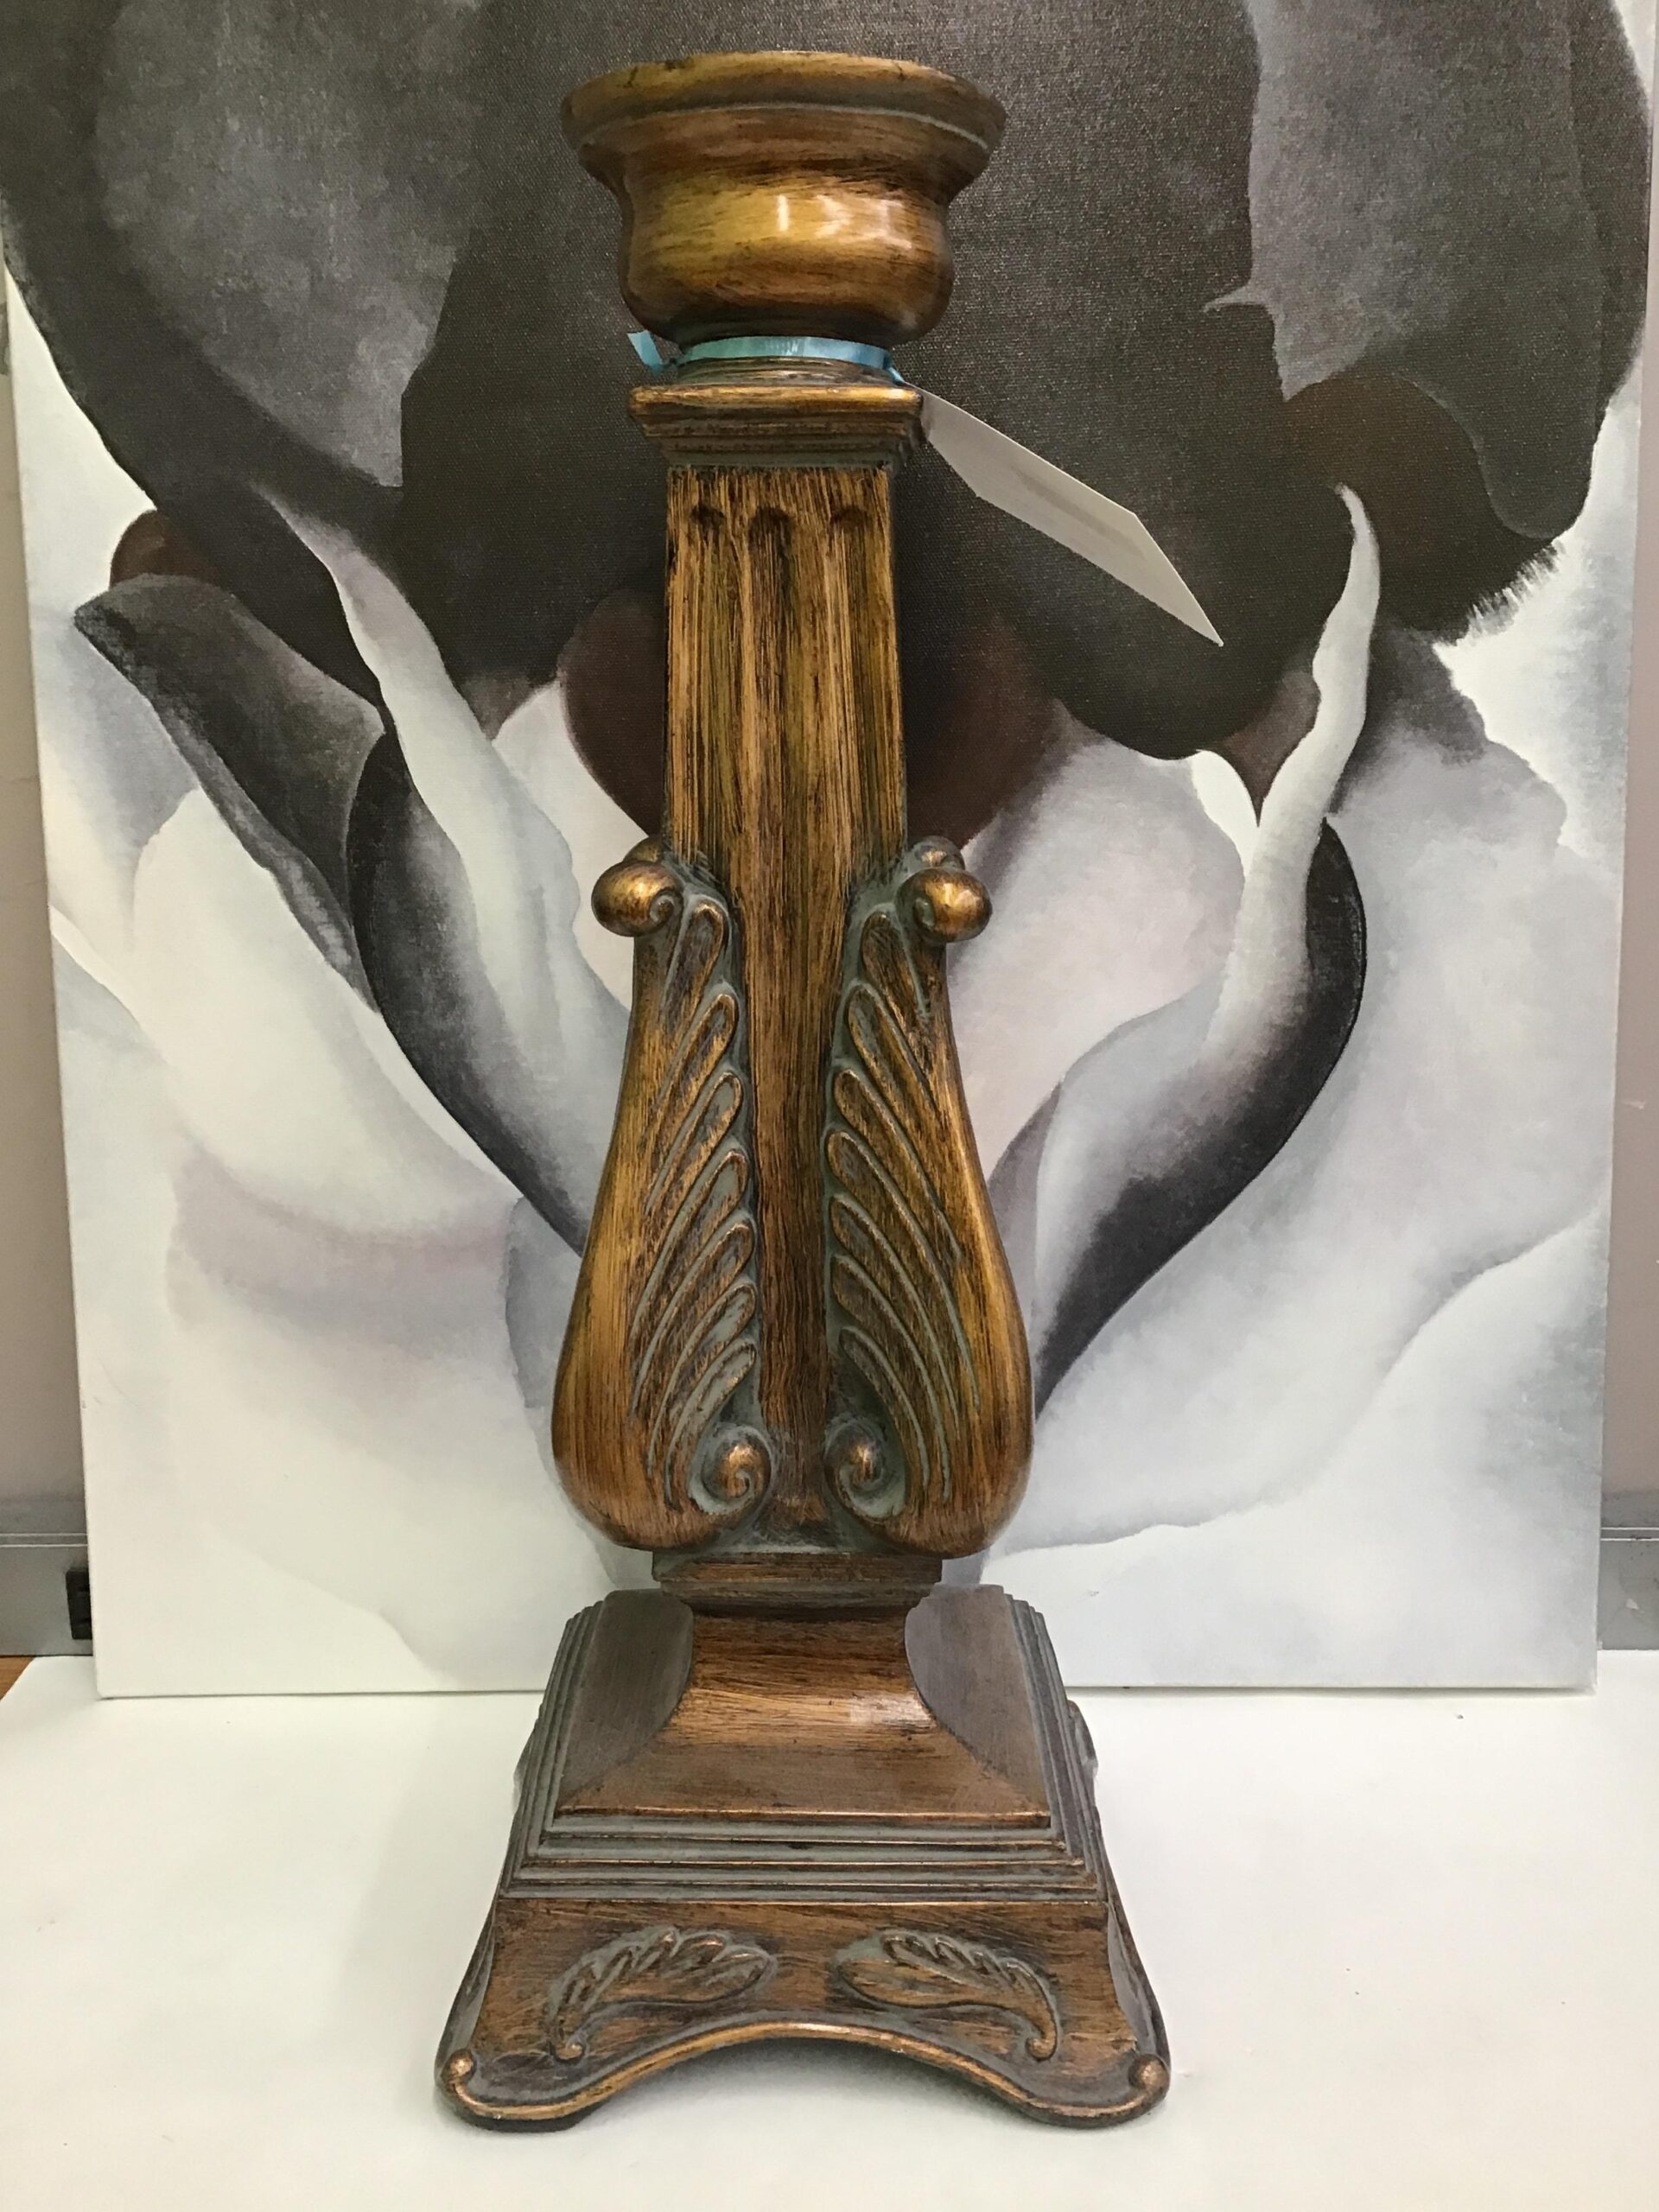 Large Ornate Wooden Candle Holder